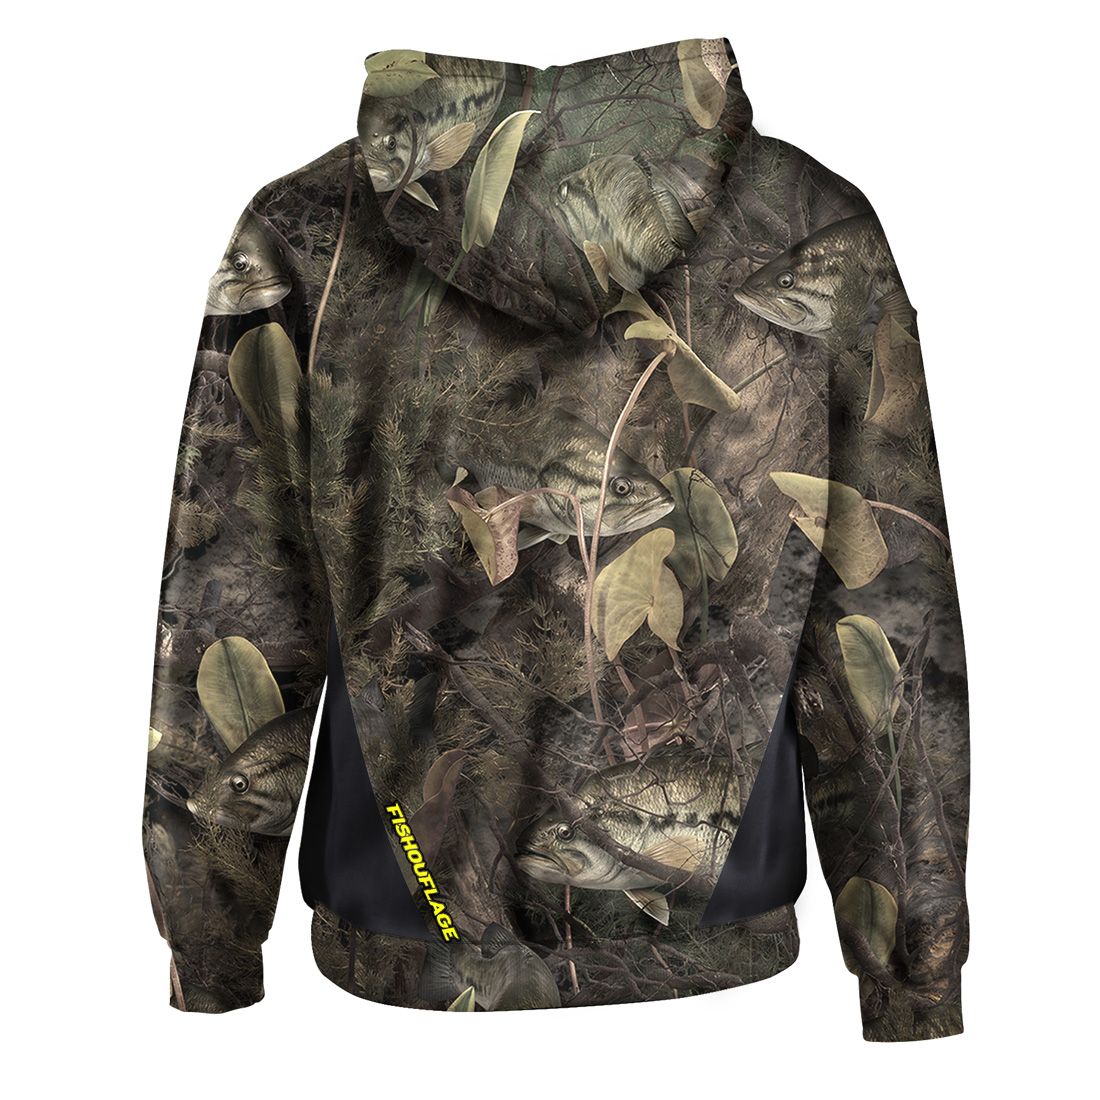 Bass Fishing Hoodies for Men  Fishouflage Sweatshirts & Outerwear